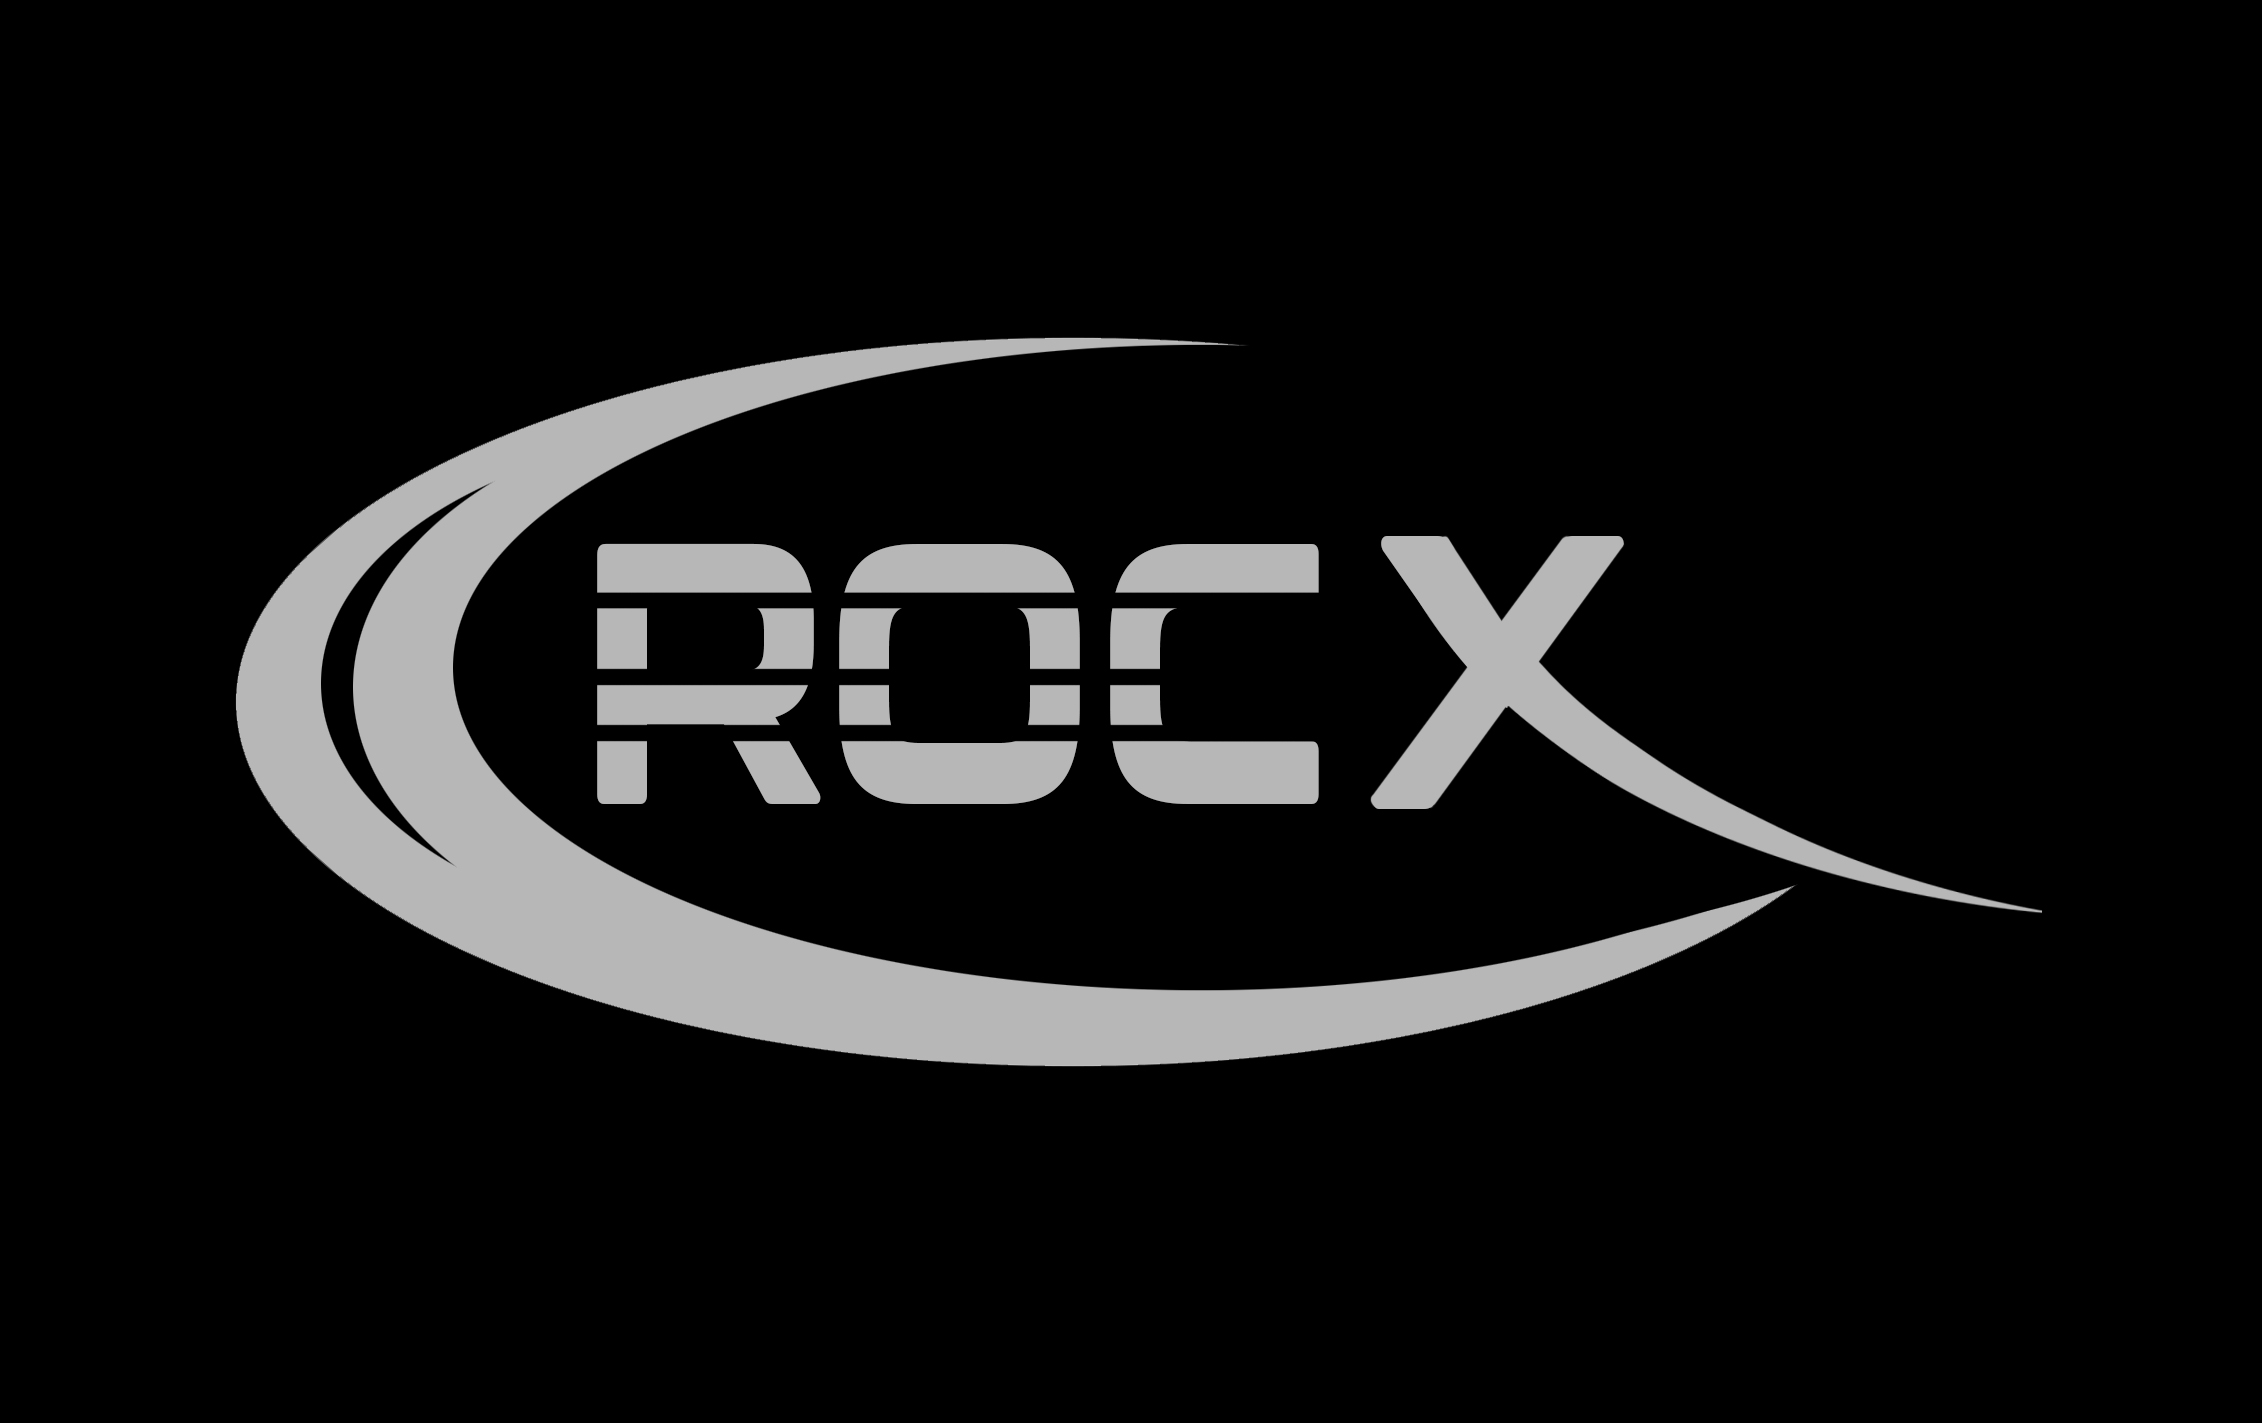 rocxl-logo-swoosh.jpg